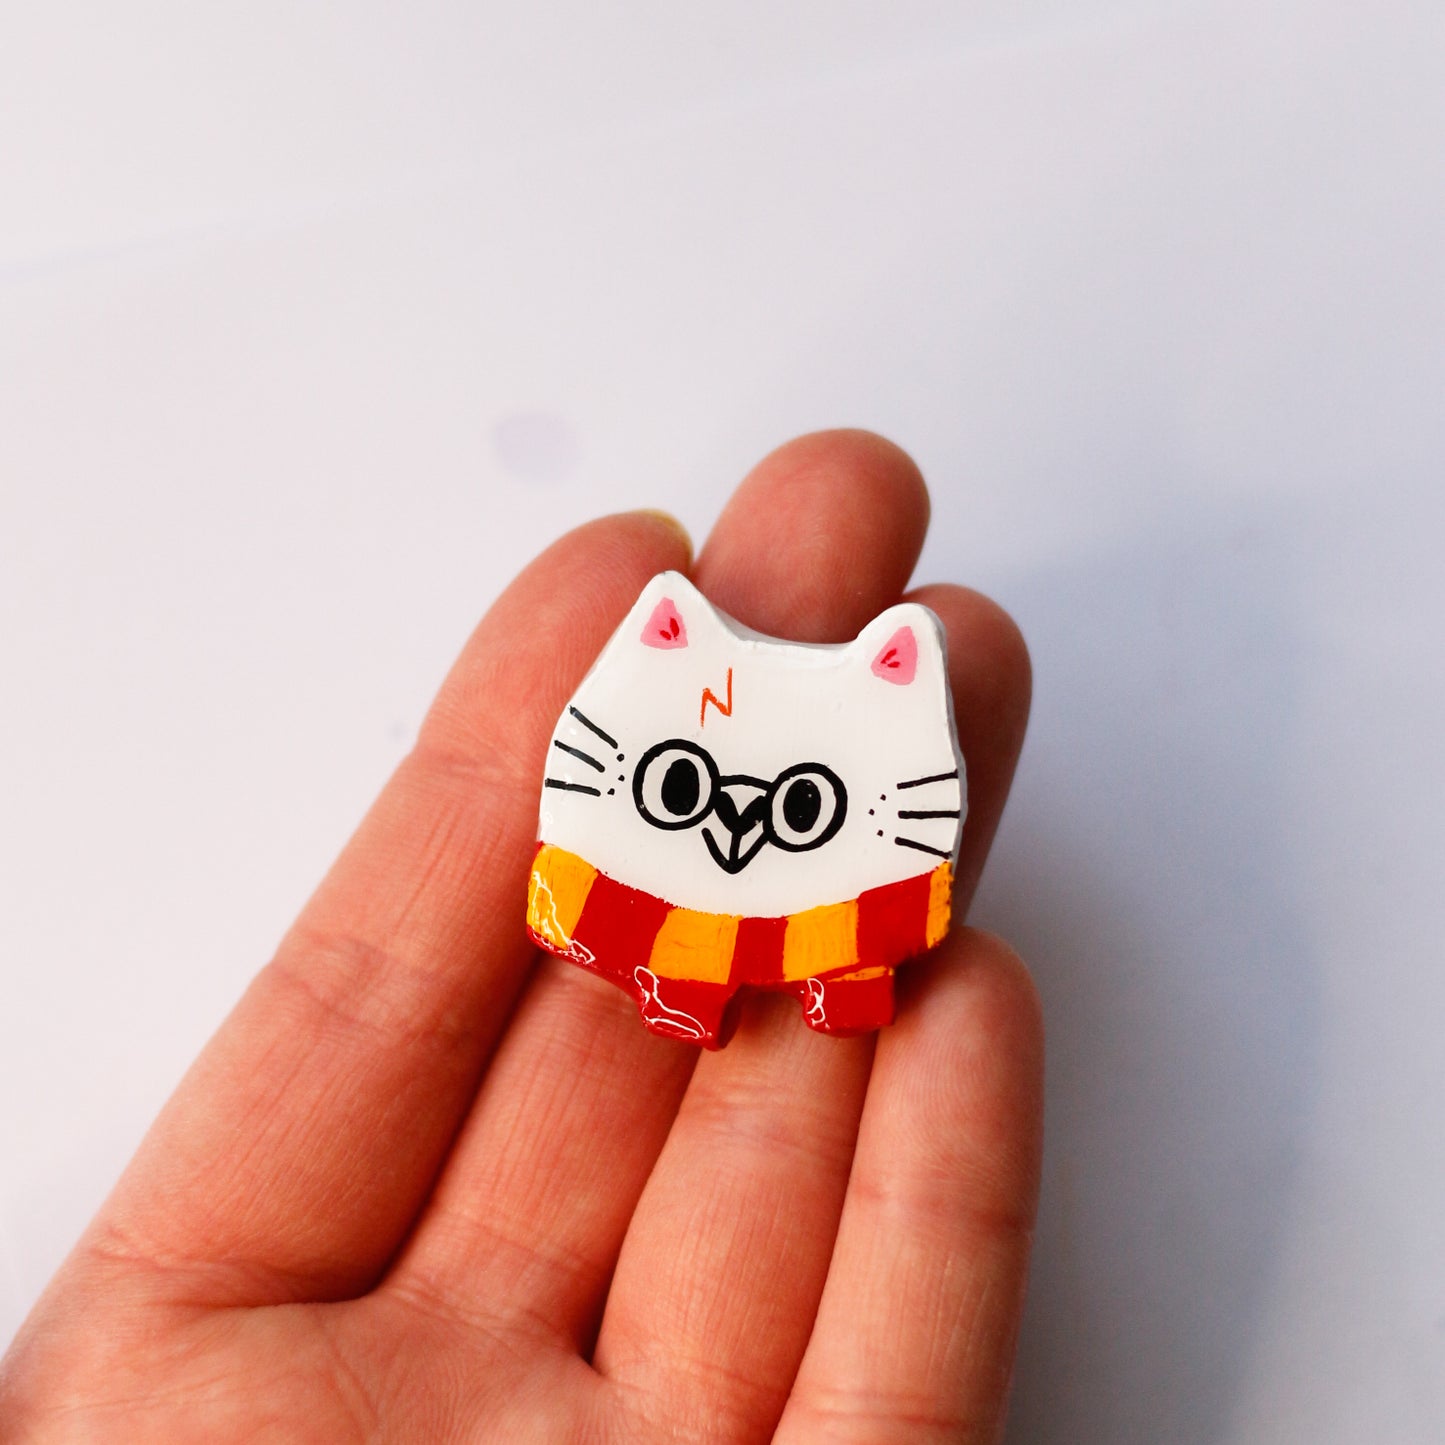 Cat Mystery Pin's - Pop Culture Cats - Surprise bag